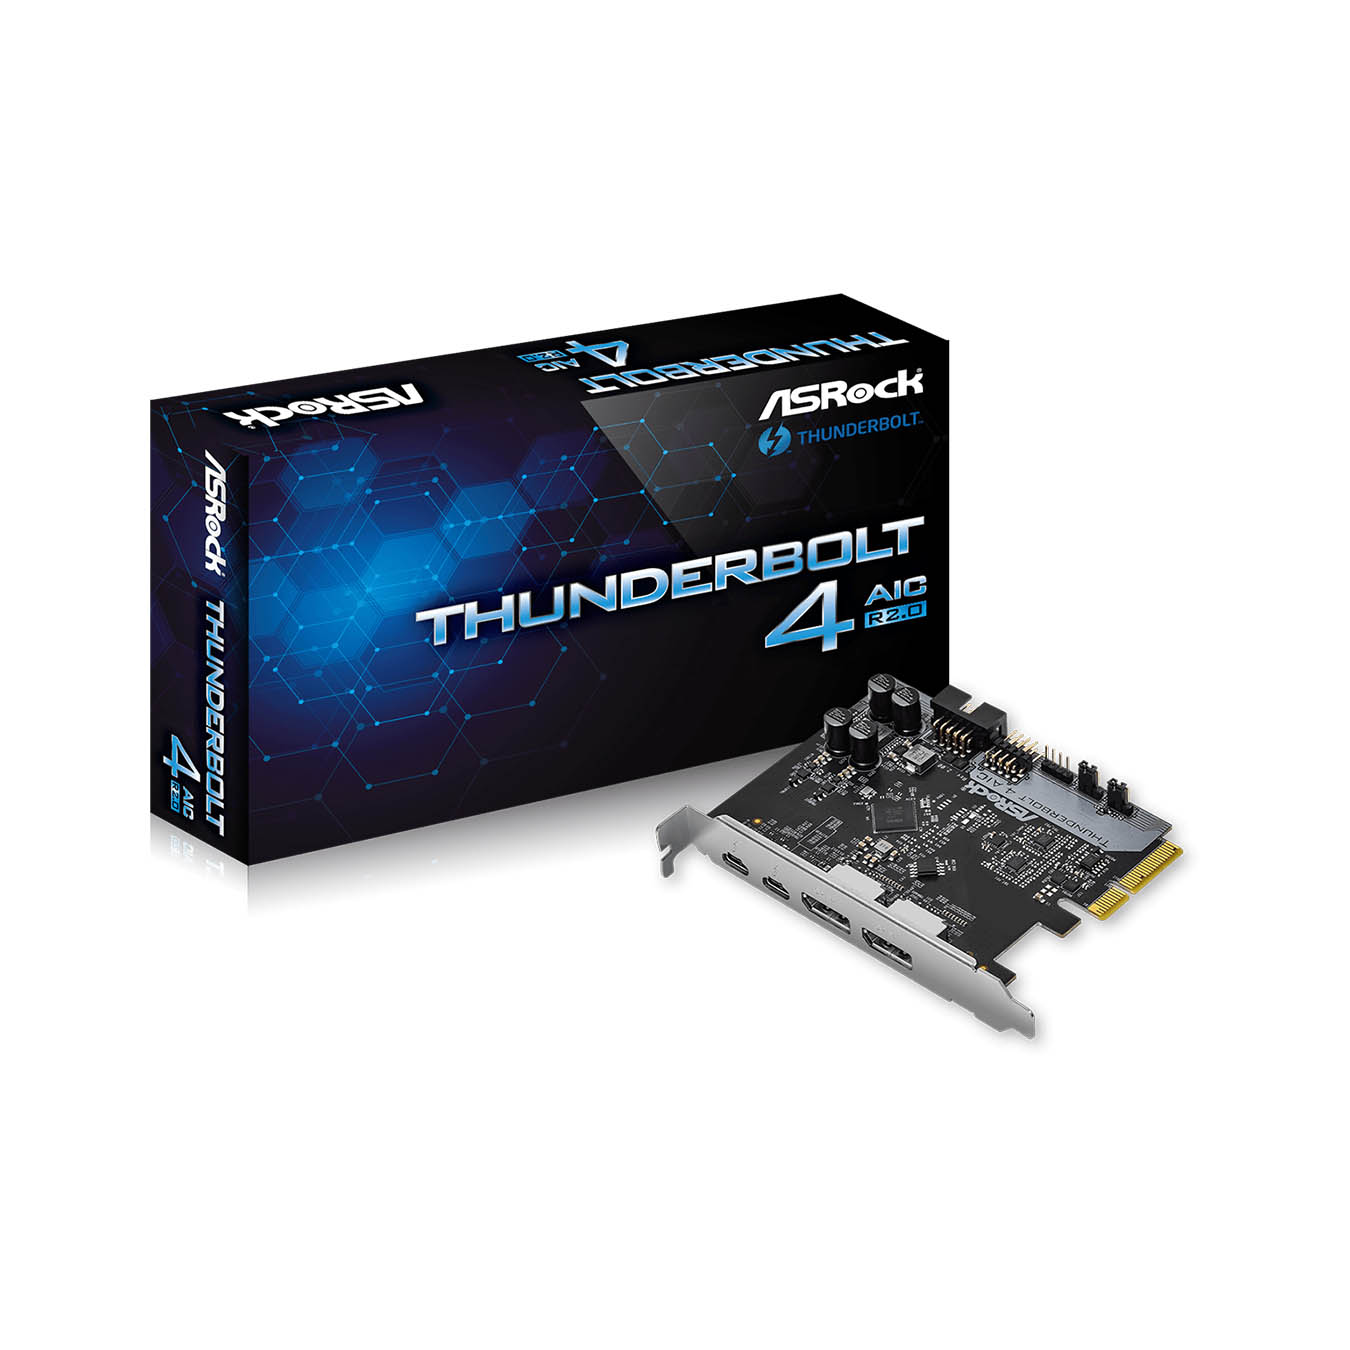 Thunderbolt 4 AIC R2.0 | ASRock(アスロック) Thunderbolt4 増設ボード Thunderbolt 4 AIC R2.0